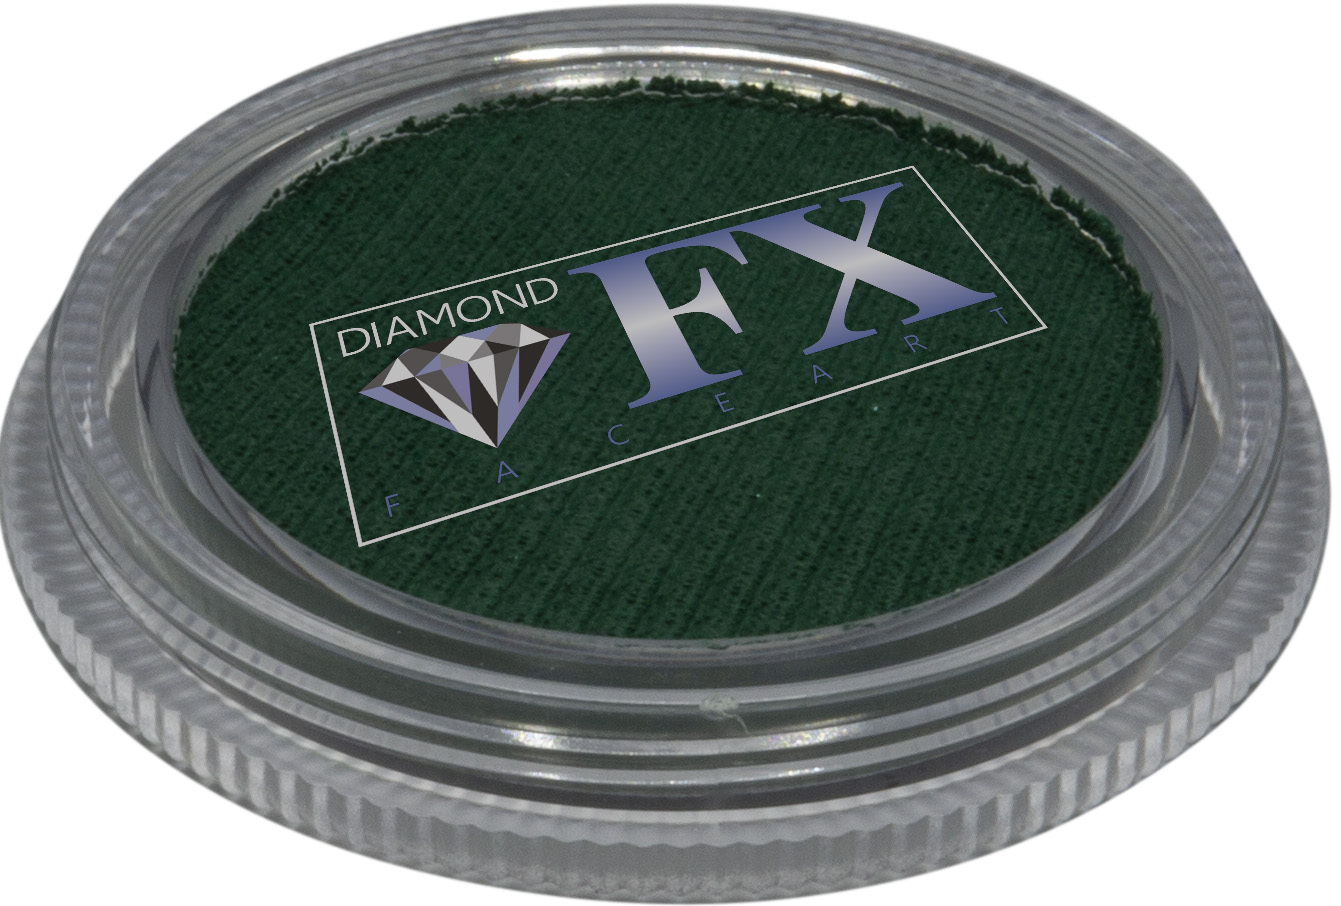 Diamond FX Dark Green 30g - Small Image